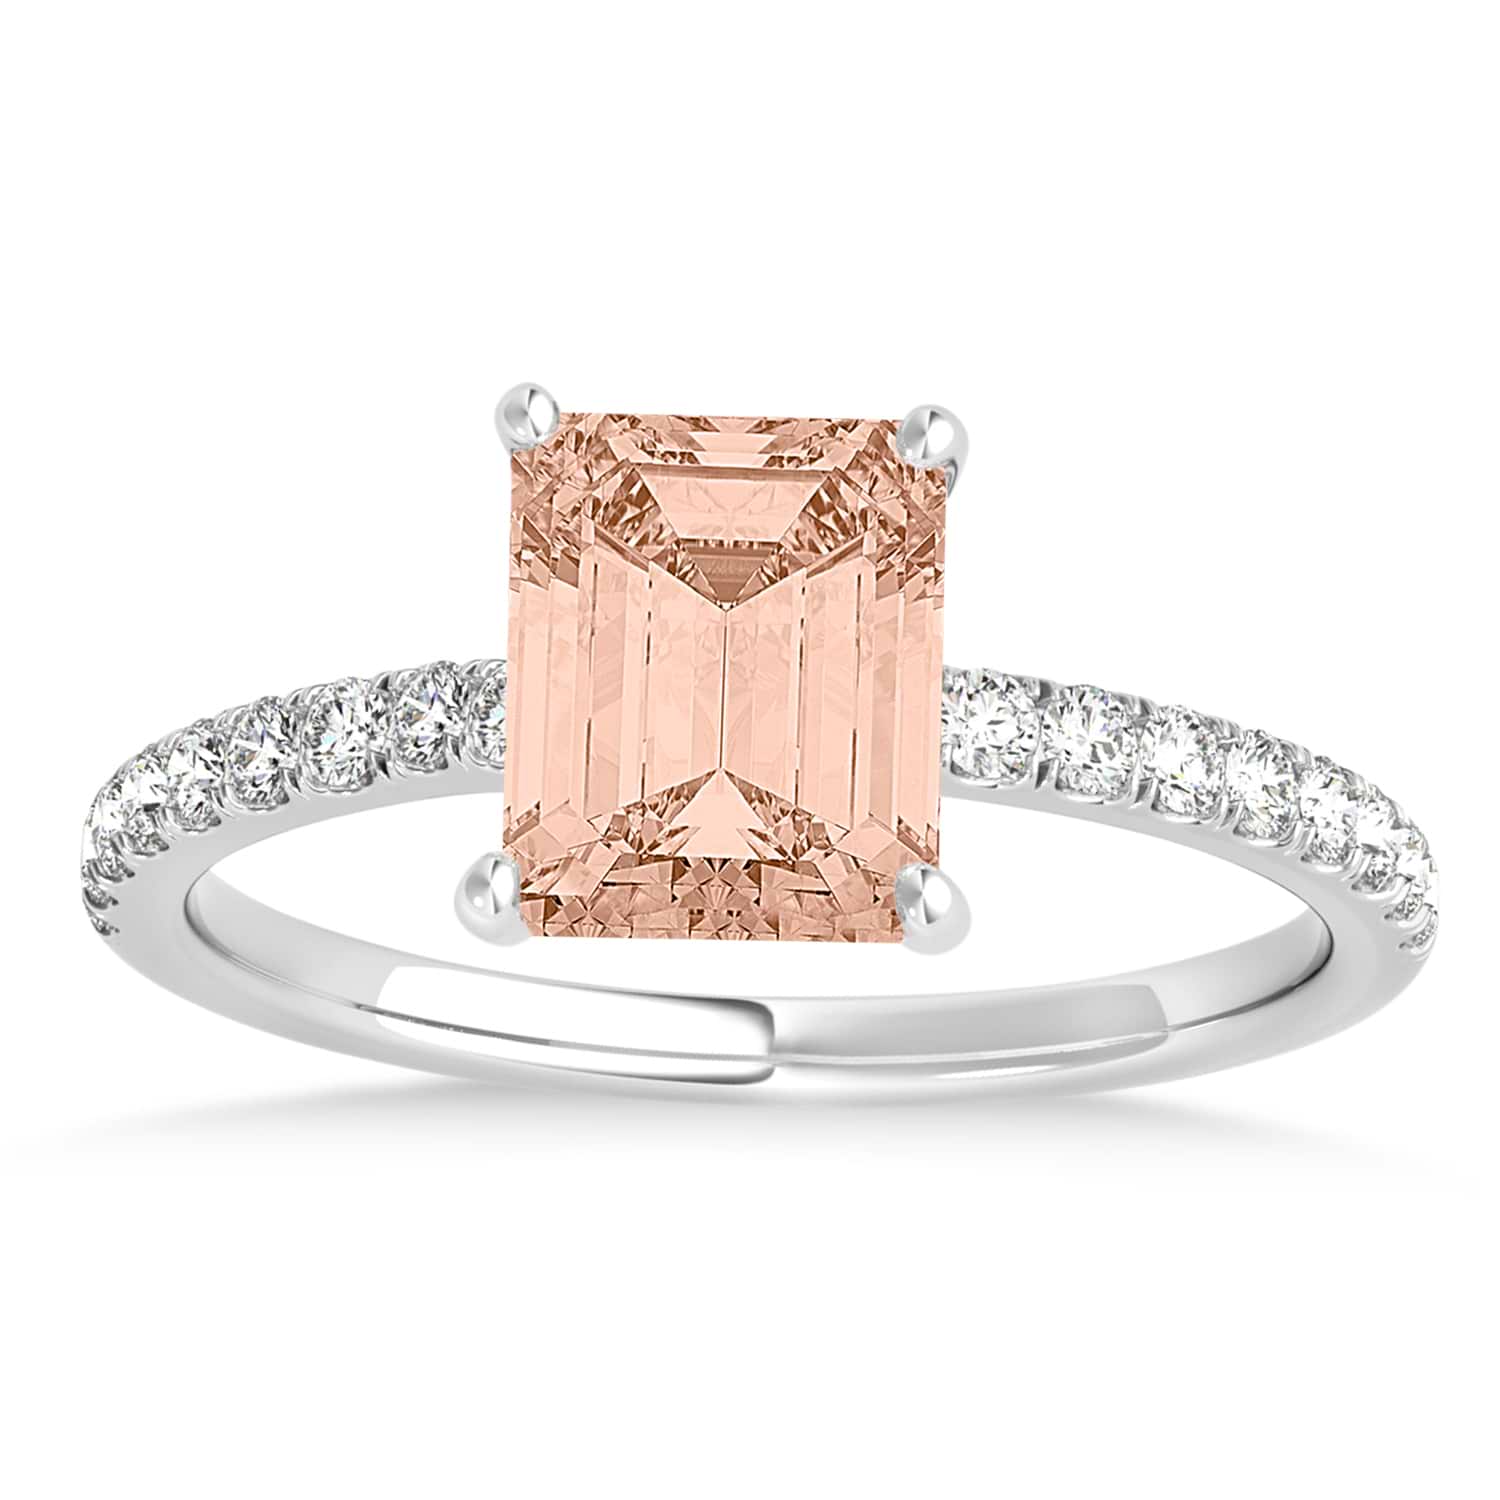 Emerald Morganite & Diamond Single Row Hidden Halo Engagement Ring 14k White Gold (1.31ct)